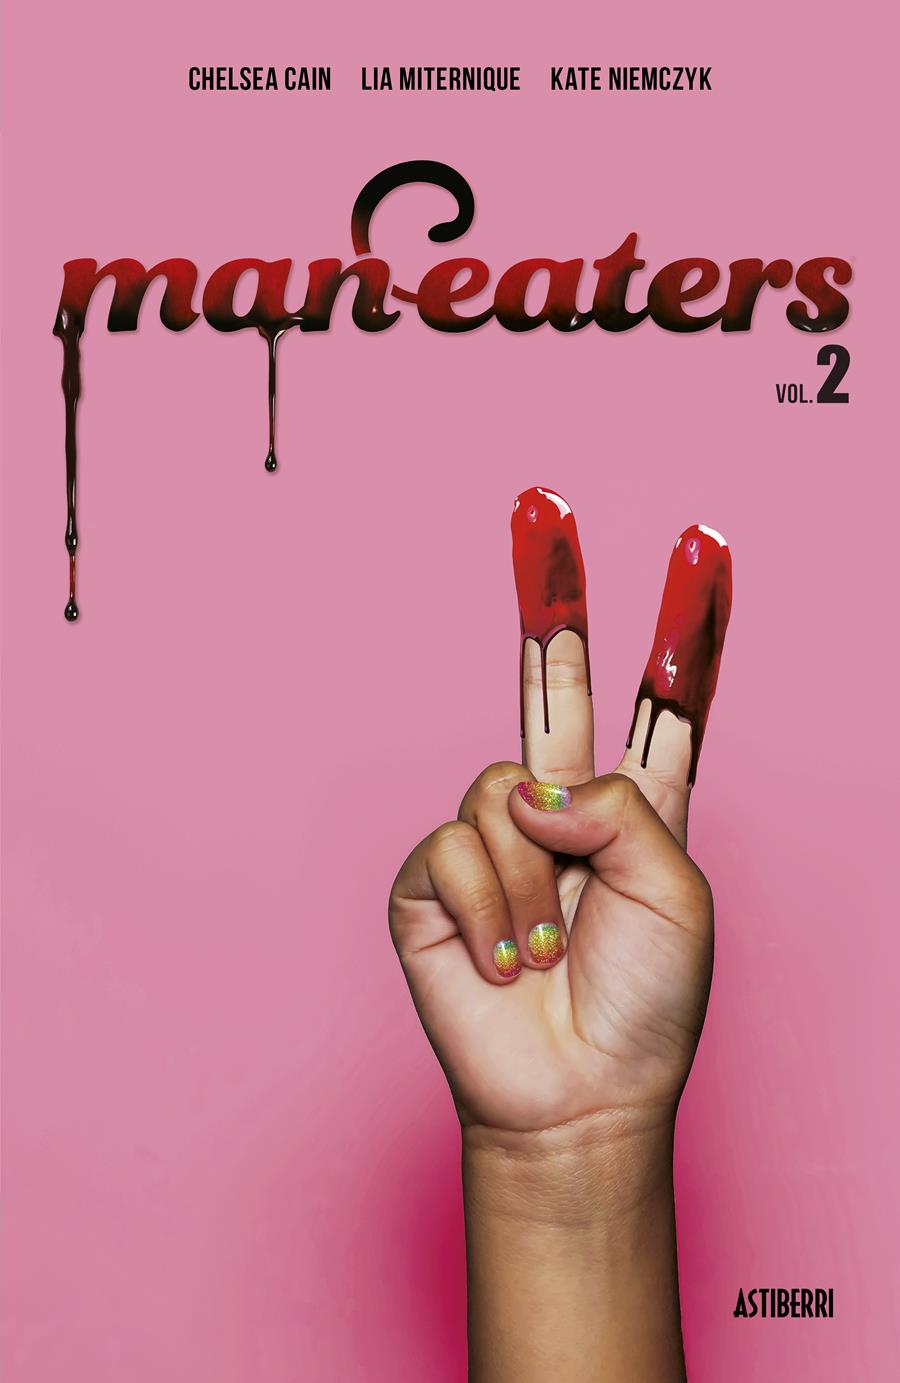 Man-eaters 2 | N1221-AST01 | Chelsea Cain, Lia Miternique , Kate Niemczyk | Terra de Còmic - Tu tienda de cómics online especializada en cómics, manga y merchandising